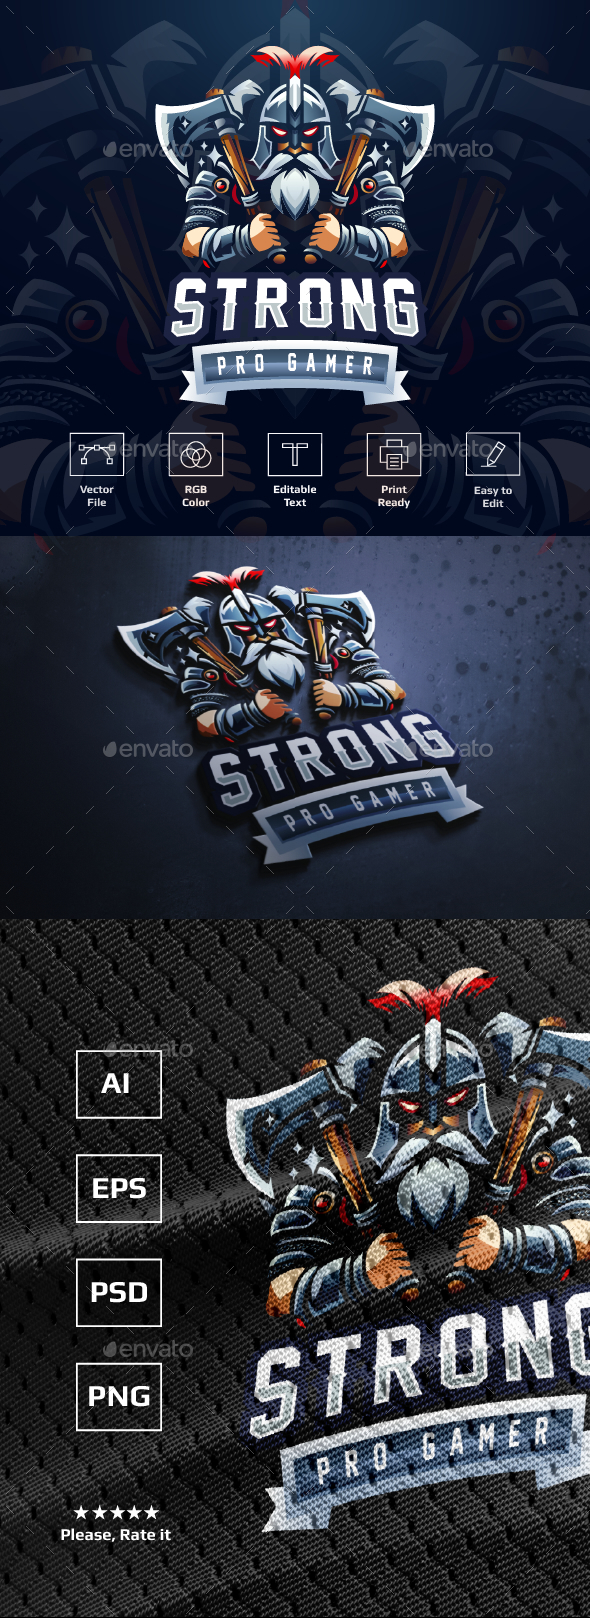 [DOWNLOAD]Strong Pro Gamer Logo